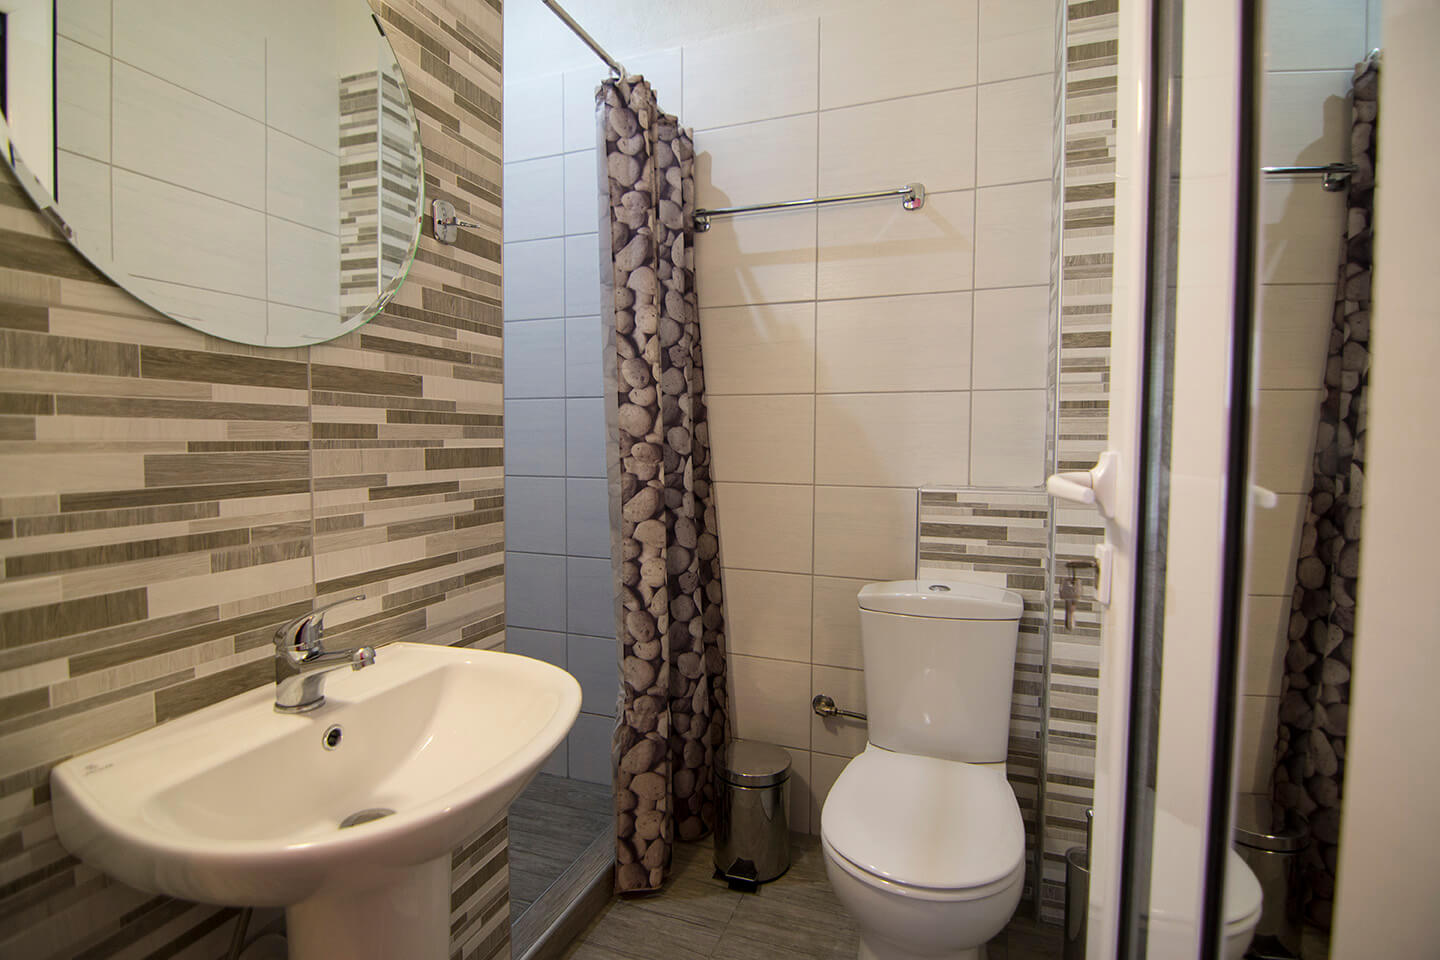 Christodoulos Eleftheria House Room 004 - Nea Vrasna - Rent Rooms - Apartments - Hotel